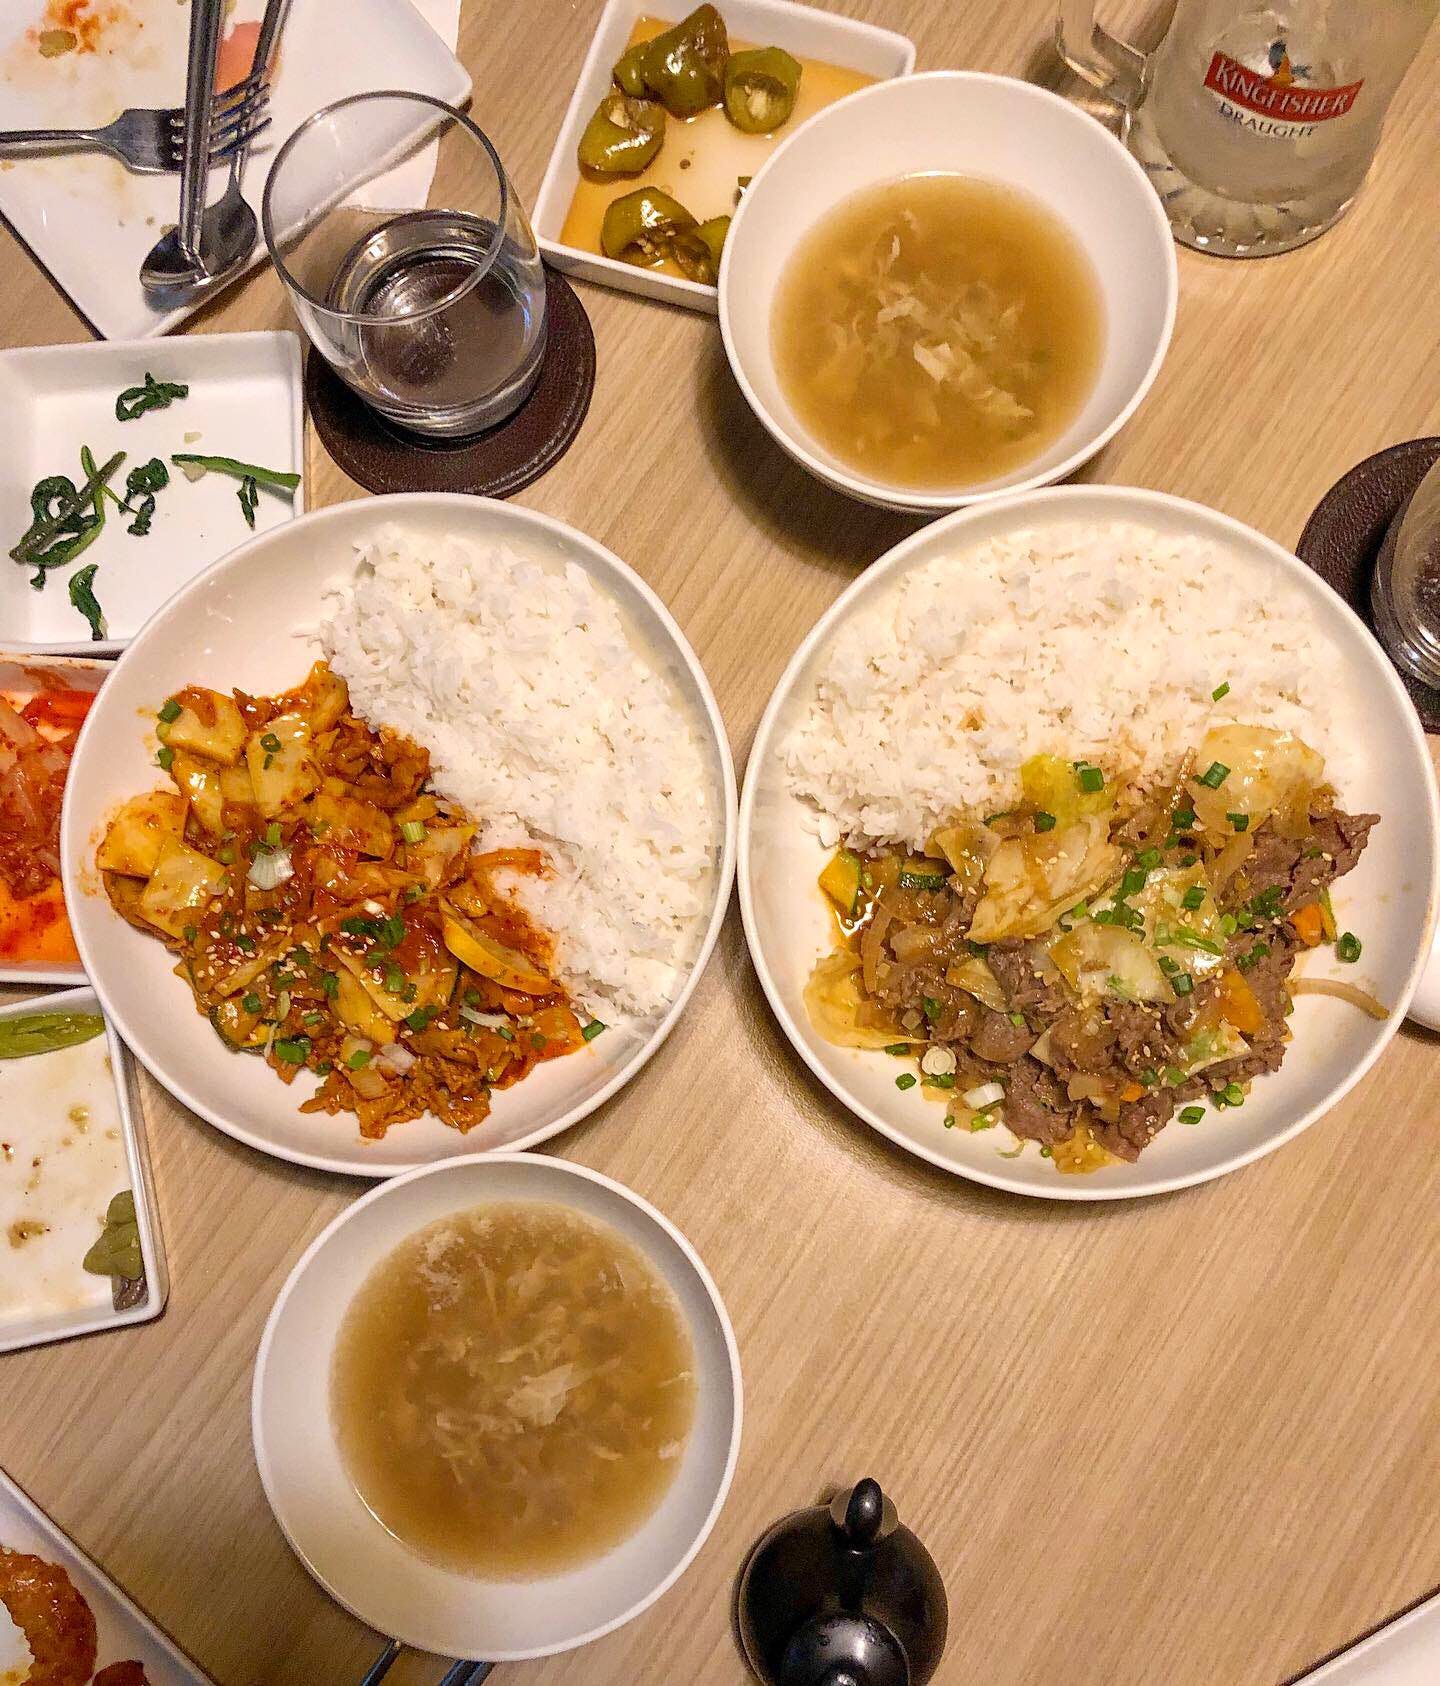 Dish,Food,Cuisine,Meal,Ingredient,Lunch,Produce,Congee,Porridge,Breakfast